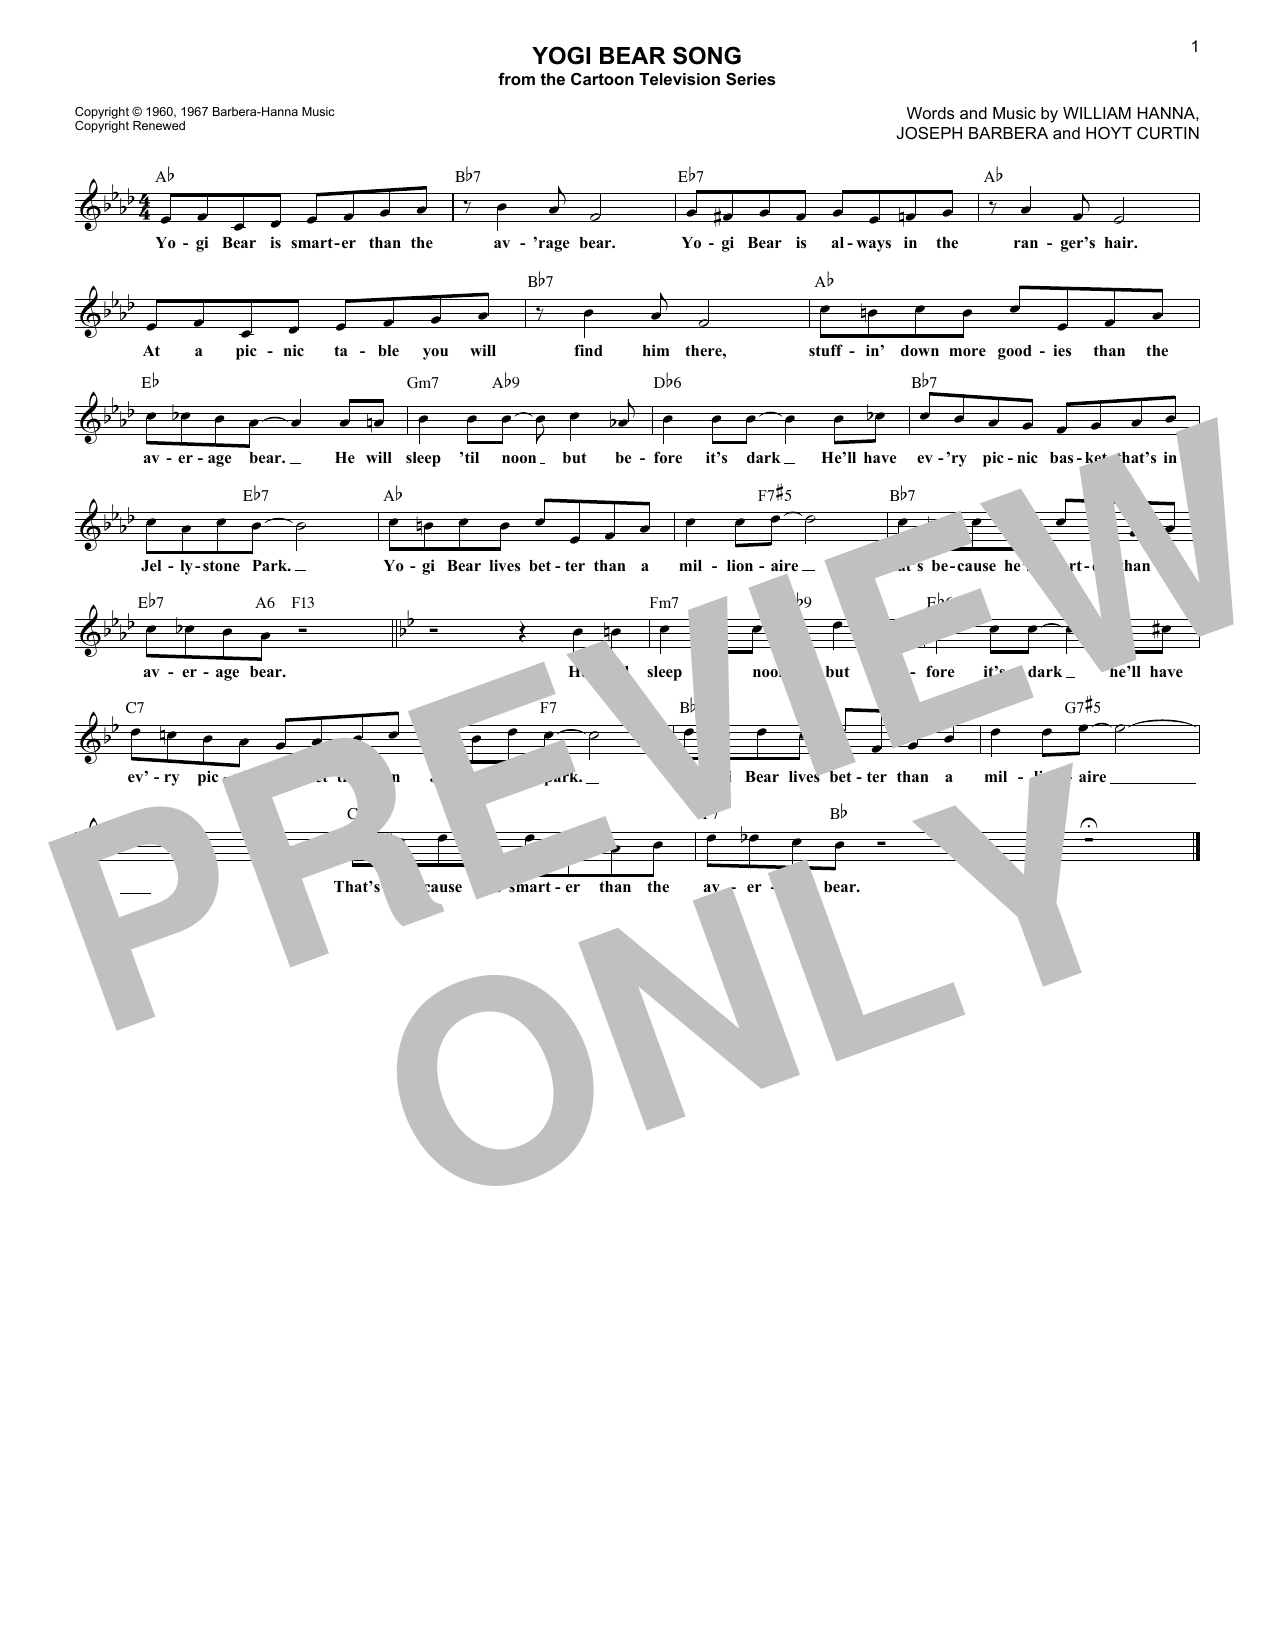 Hoyt Curtin Yogi Bear Song Sheet Music Notes & Chords for Lead Sheet / Fake Book - Download or Print PDF